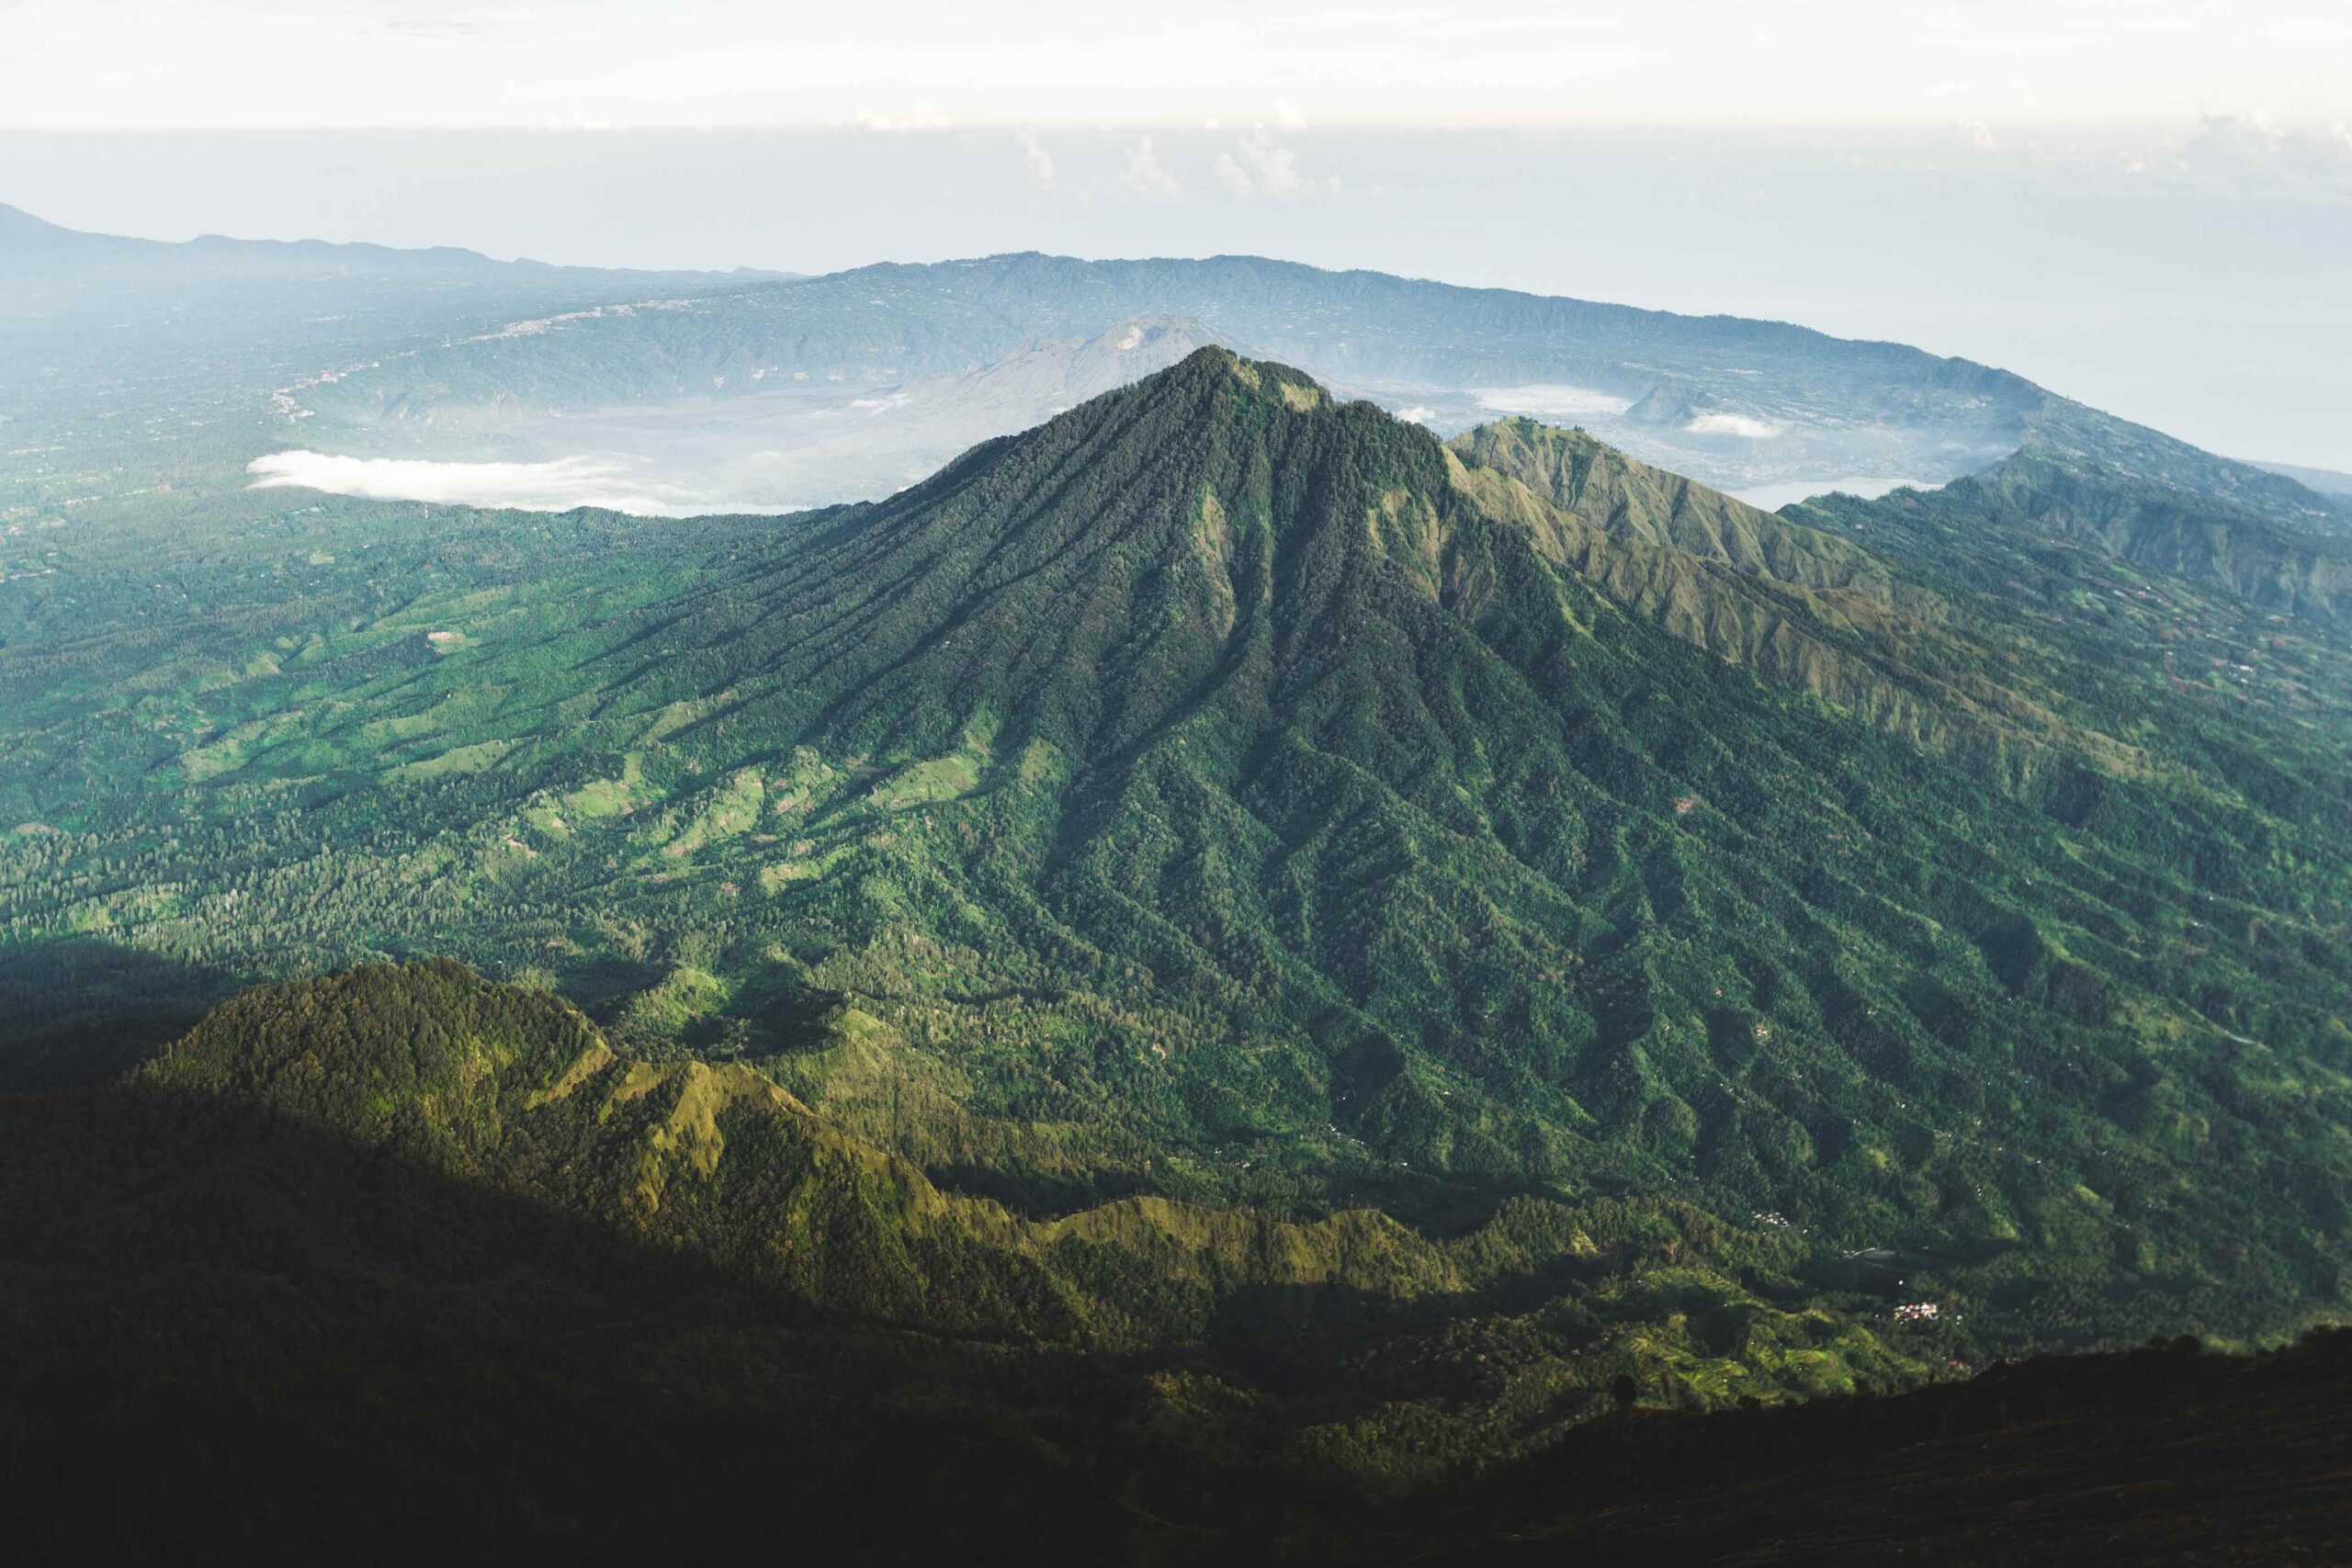 View of Batur Caldera and Gunung Abang from mount Agung in Bali